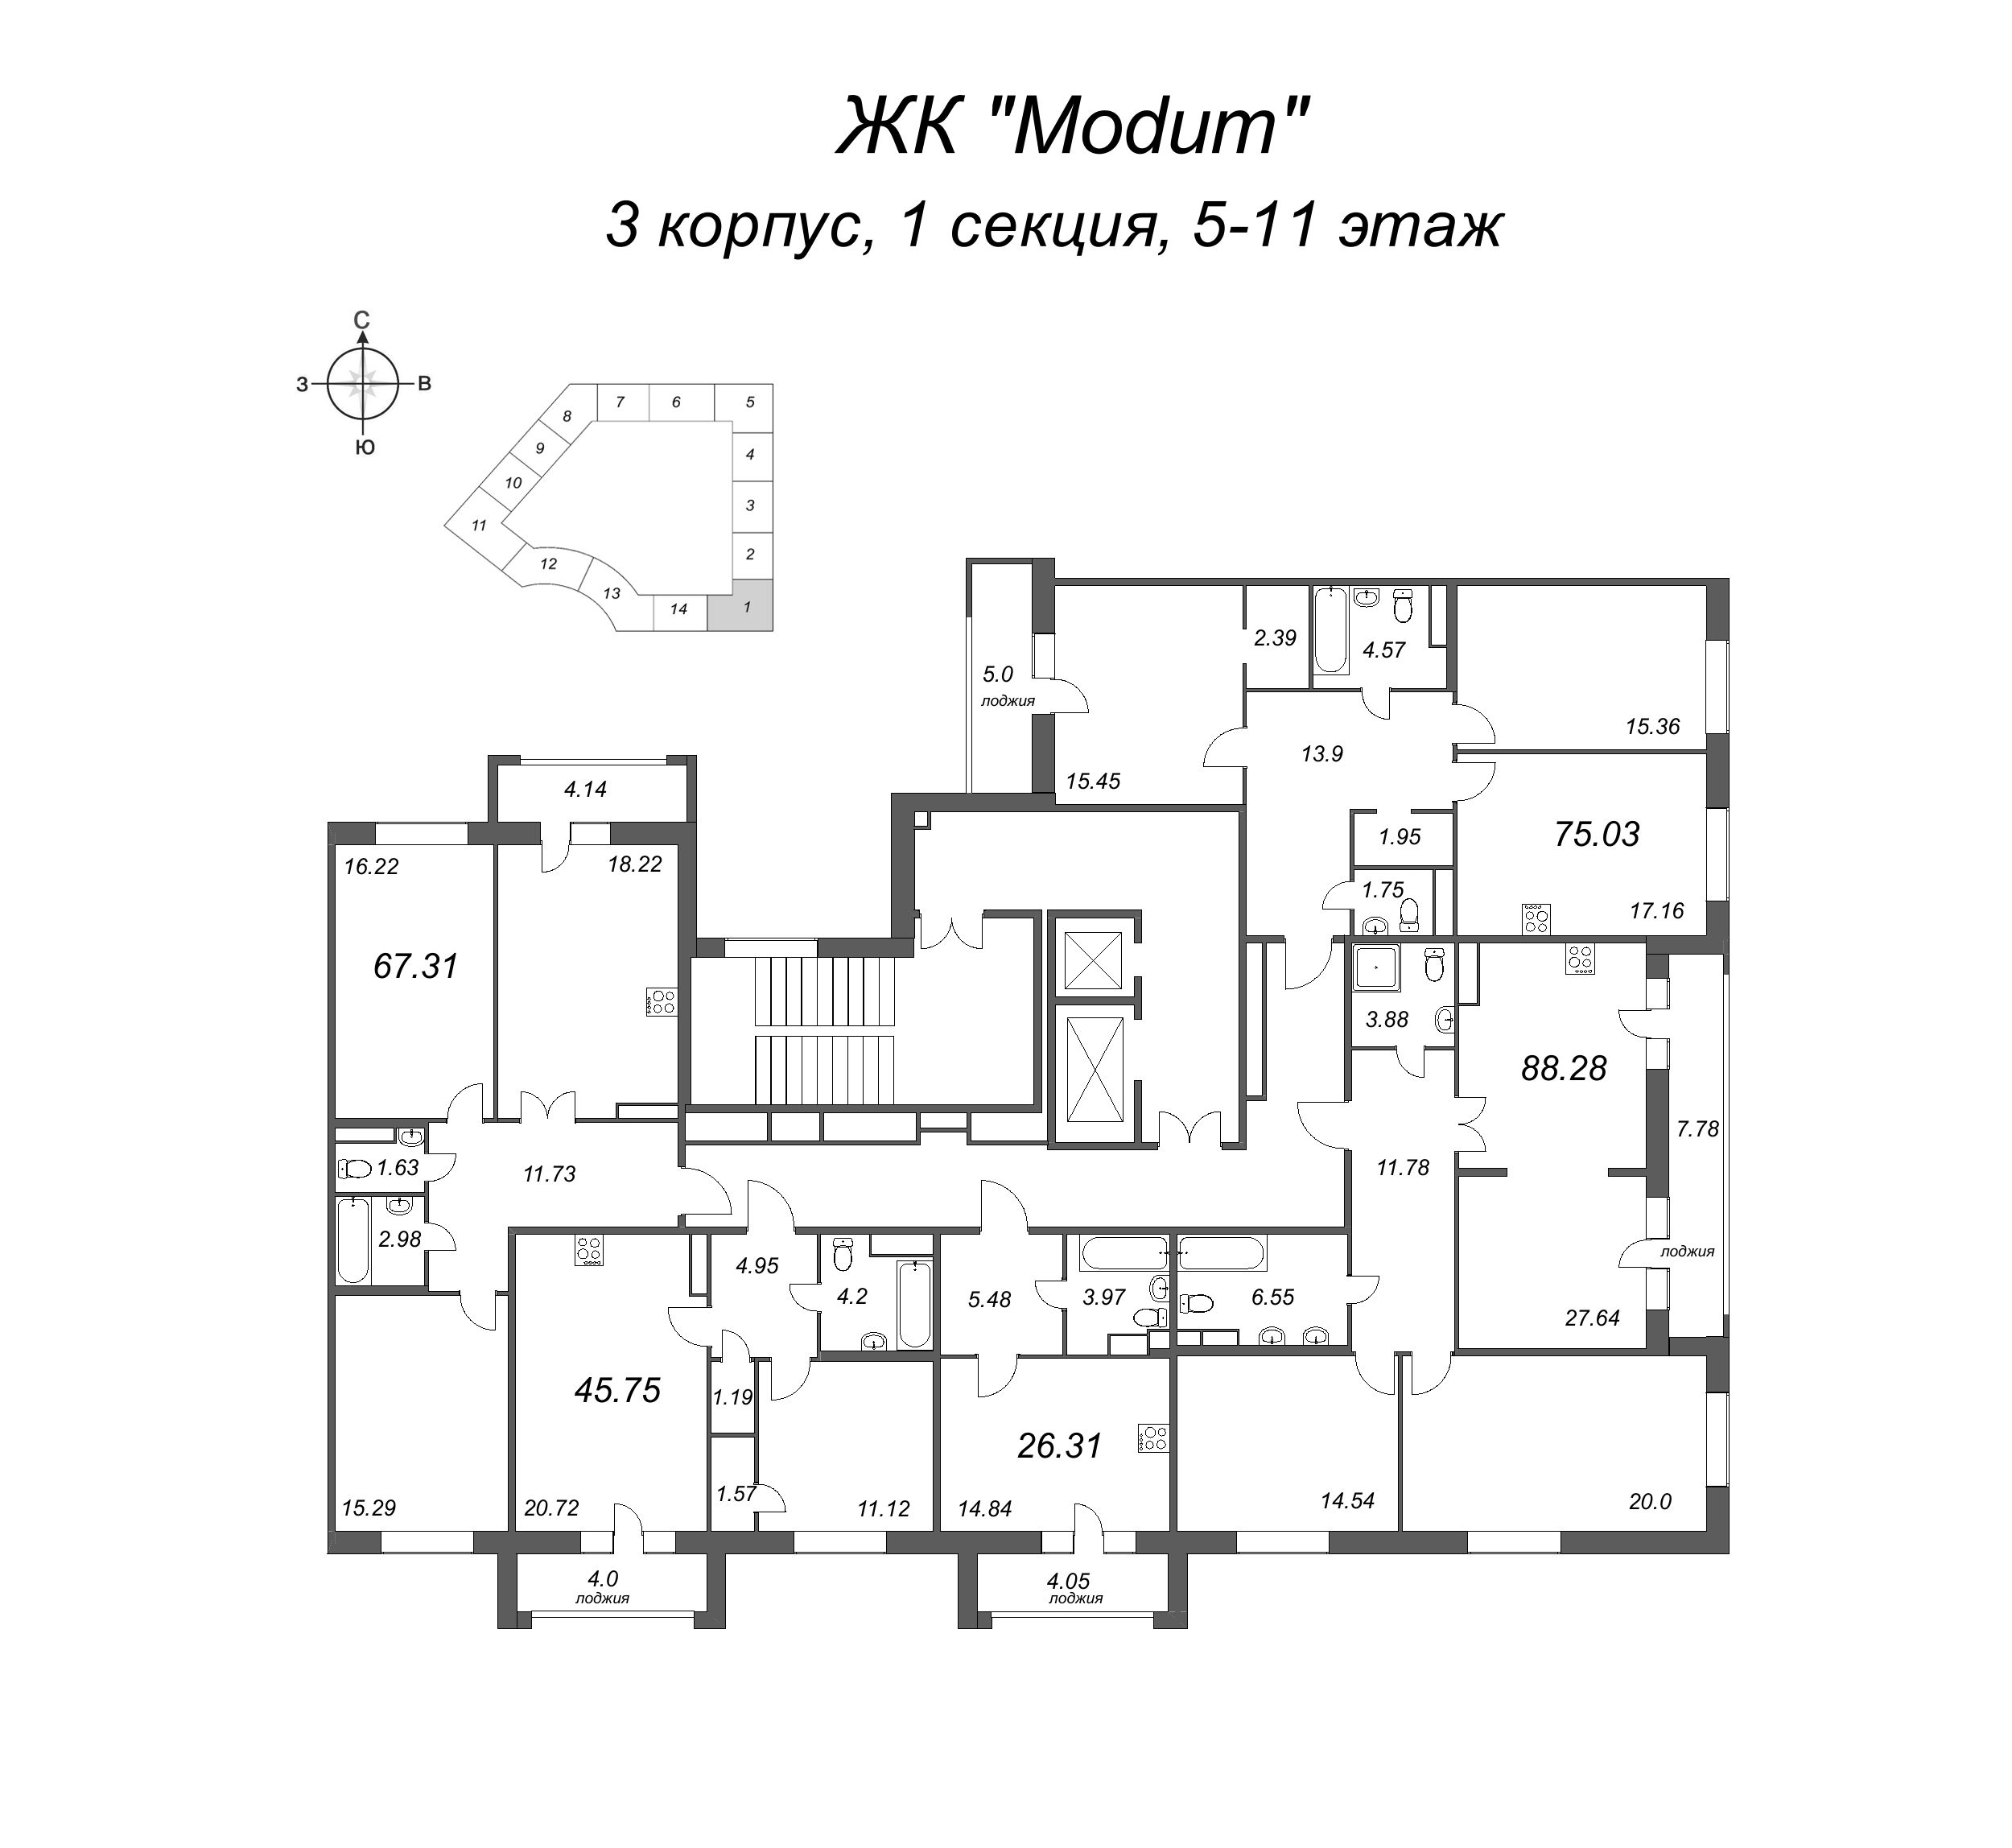 2-комнатная (Евро) квартира, 45.75 м² - планировка этажа